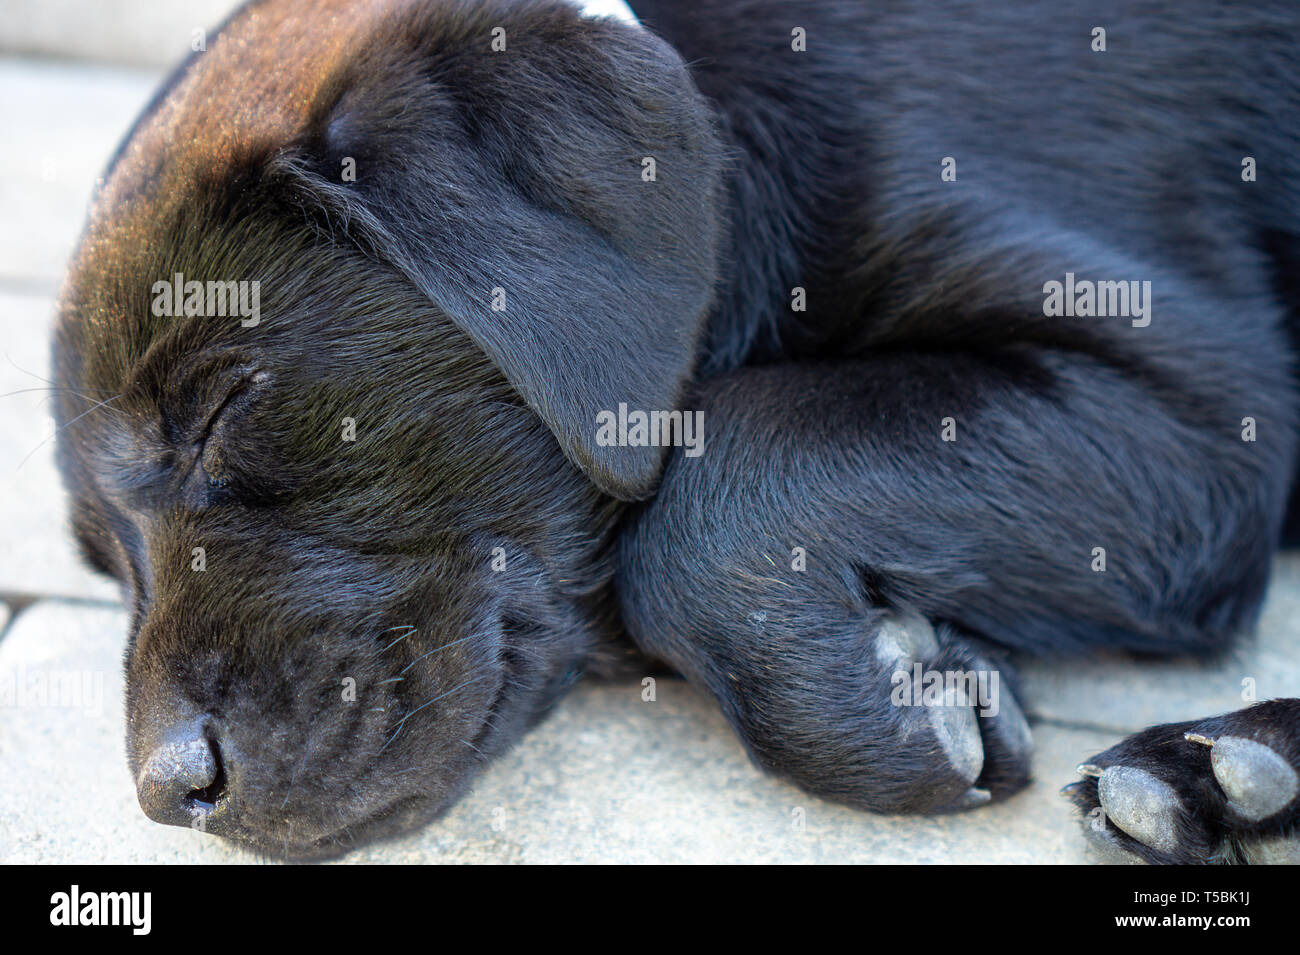 Black close up laid sleeping lazy labrador puppy face close up Stock Photo